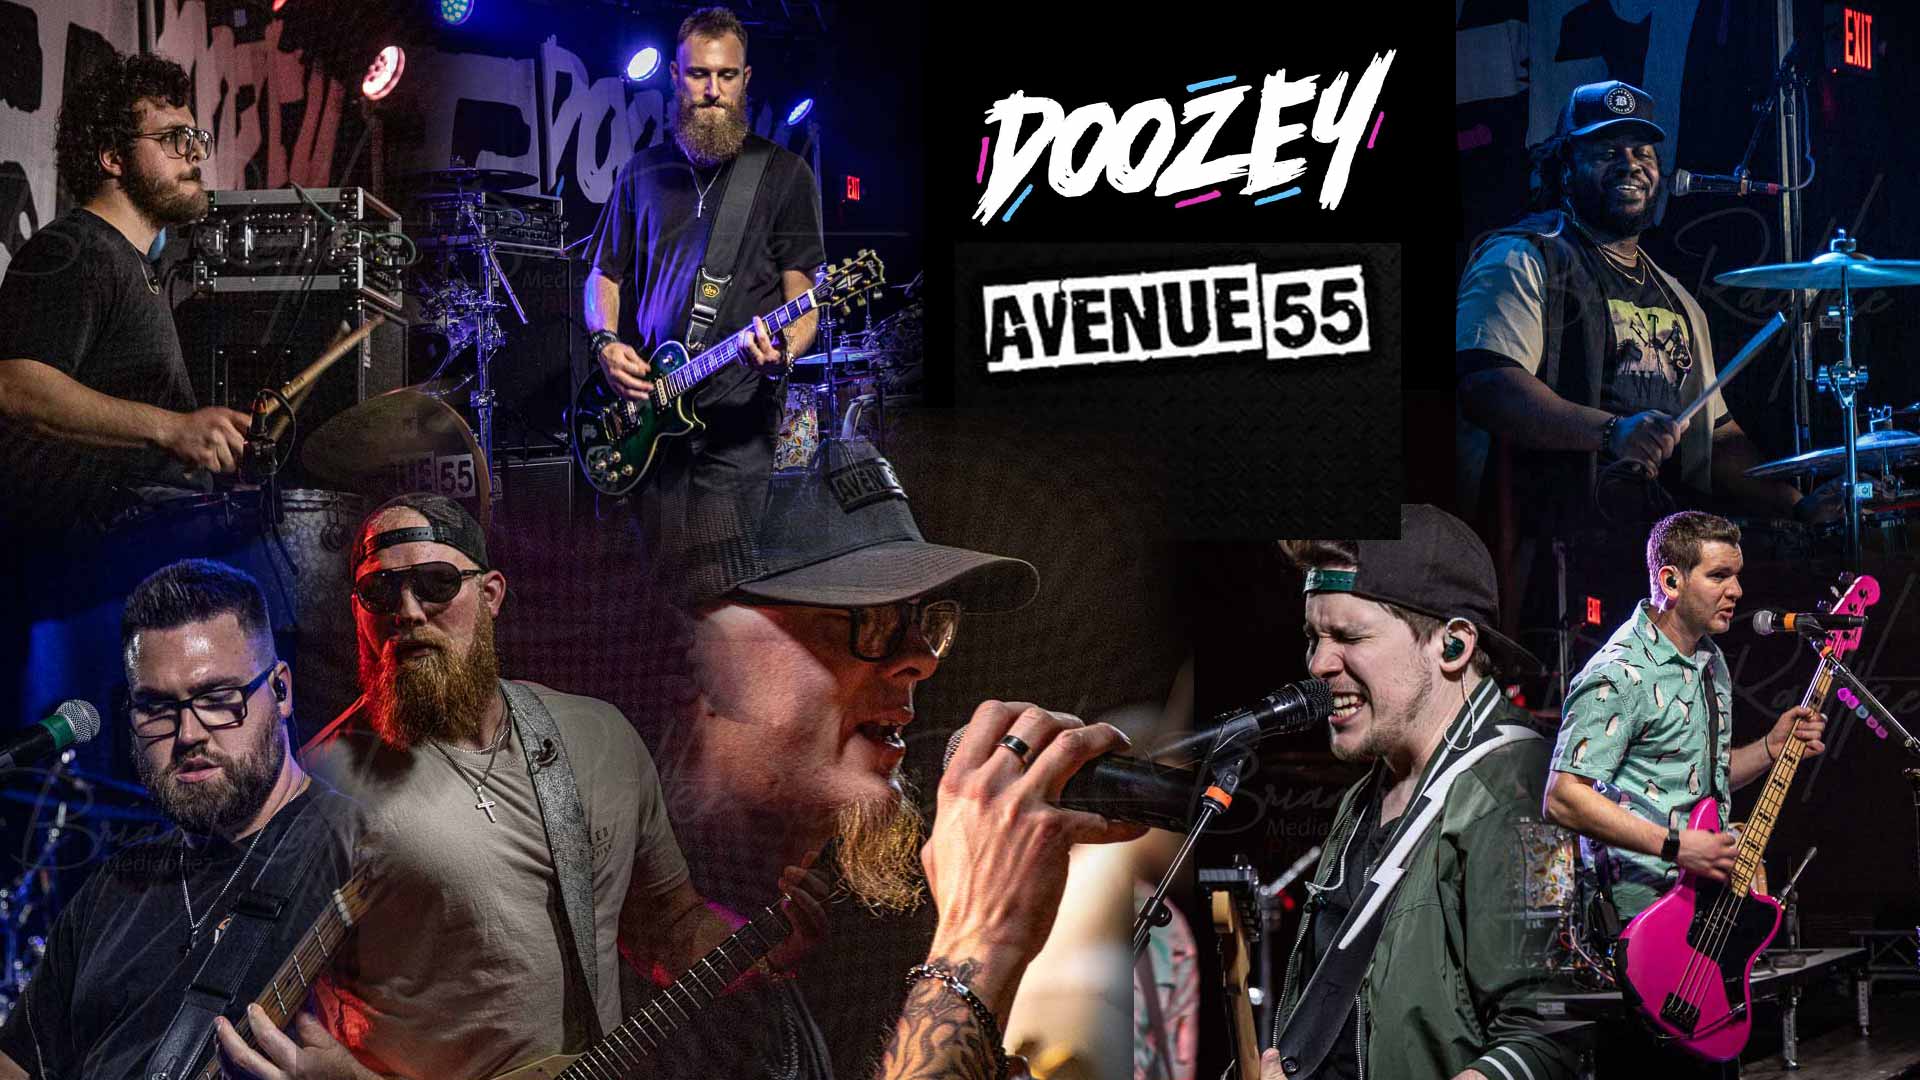 Doozey & Avenue 55 Bands shake the walls at Maloney's in Kaukauna Wisconsin